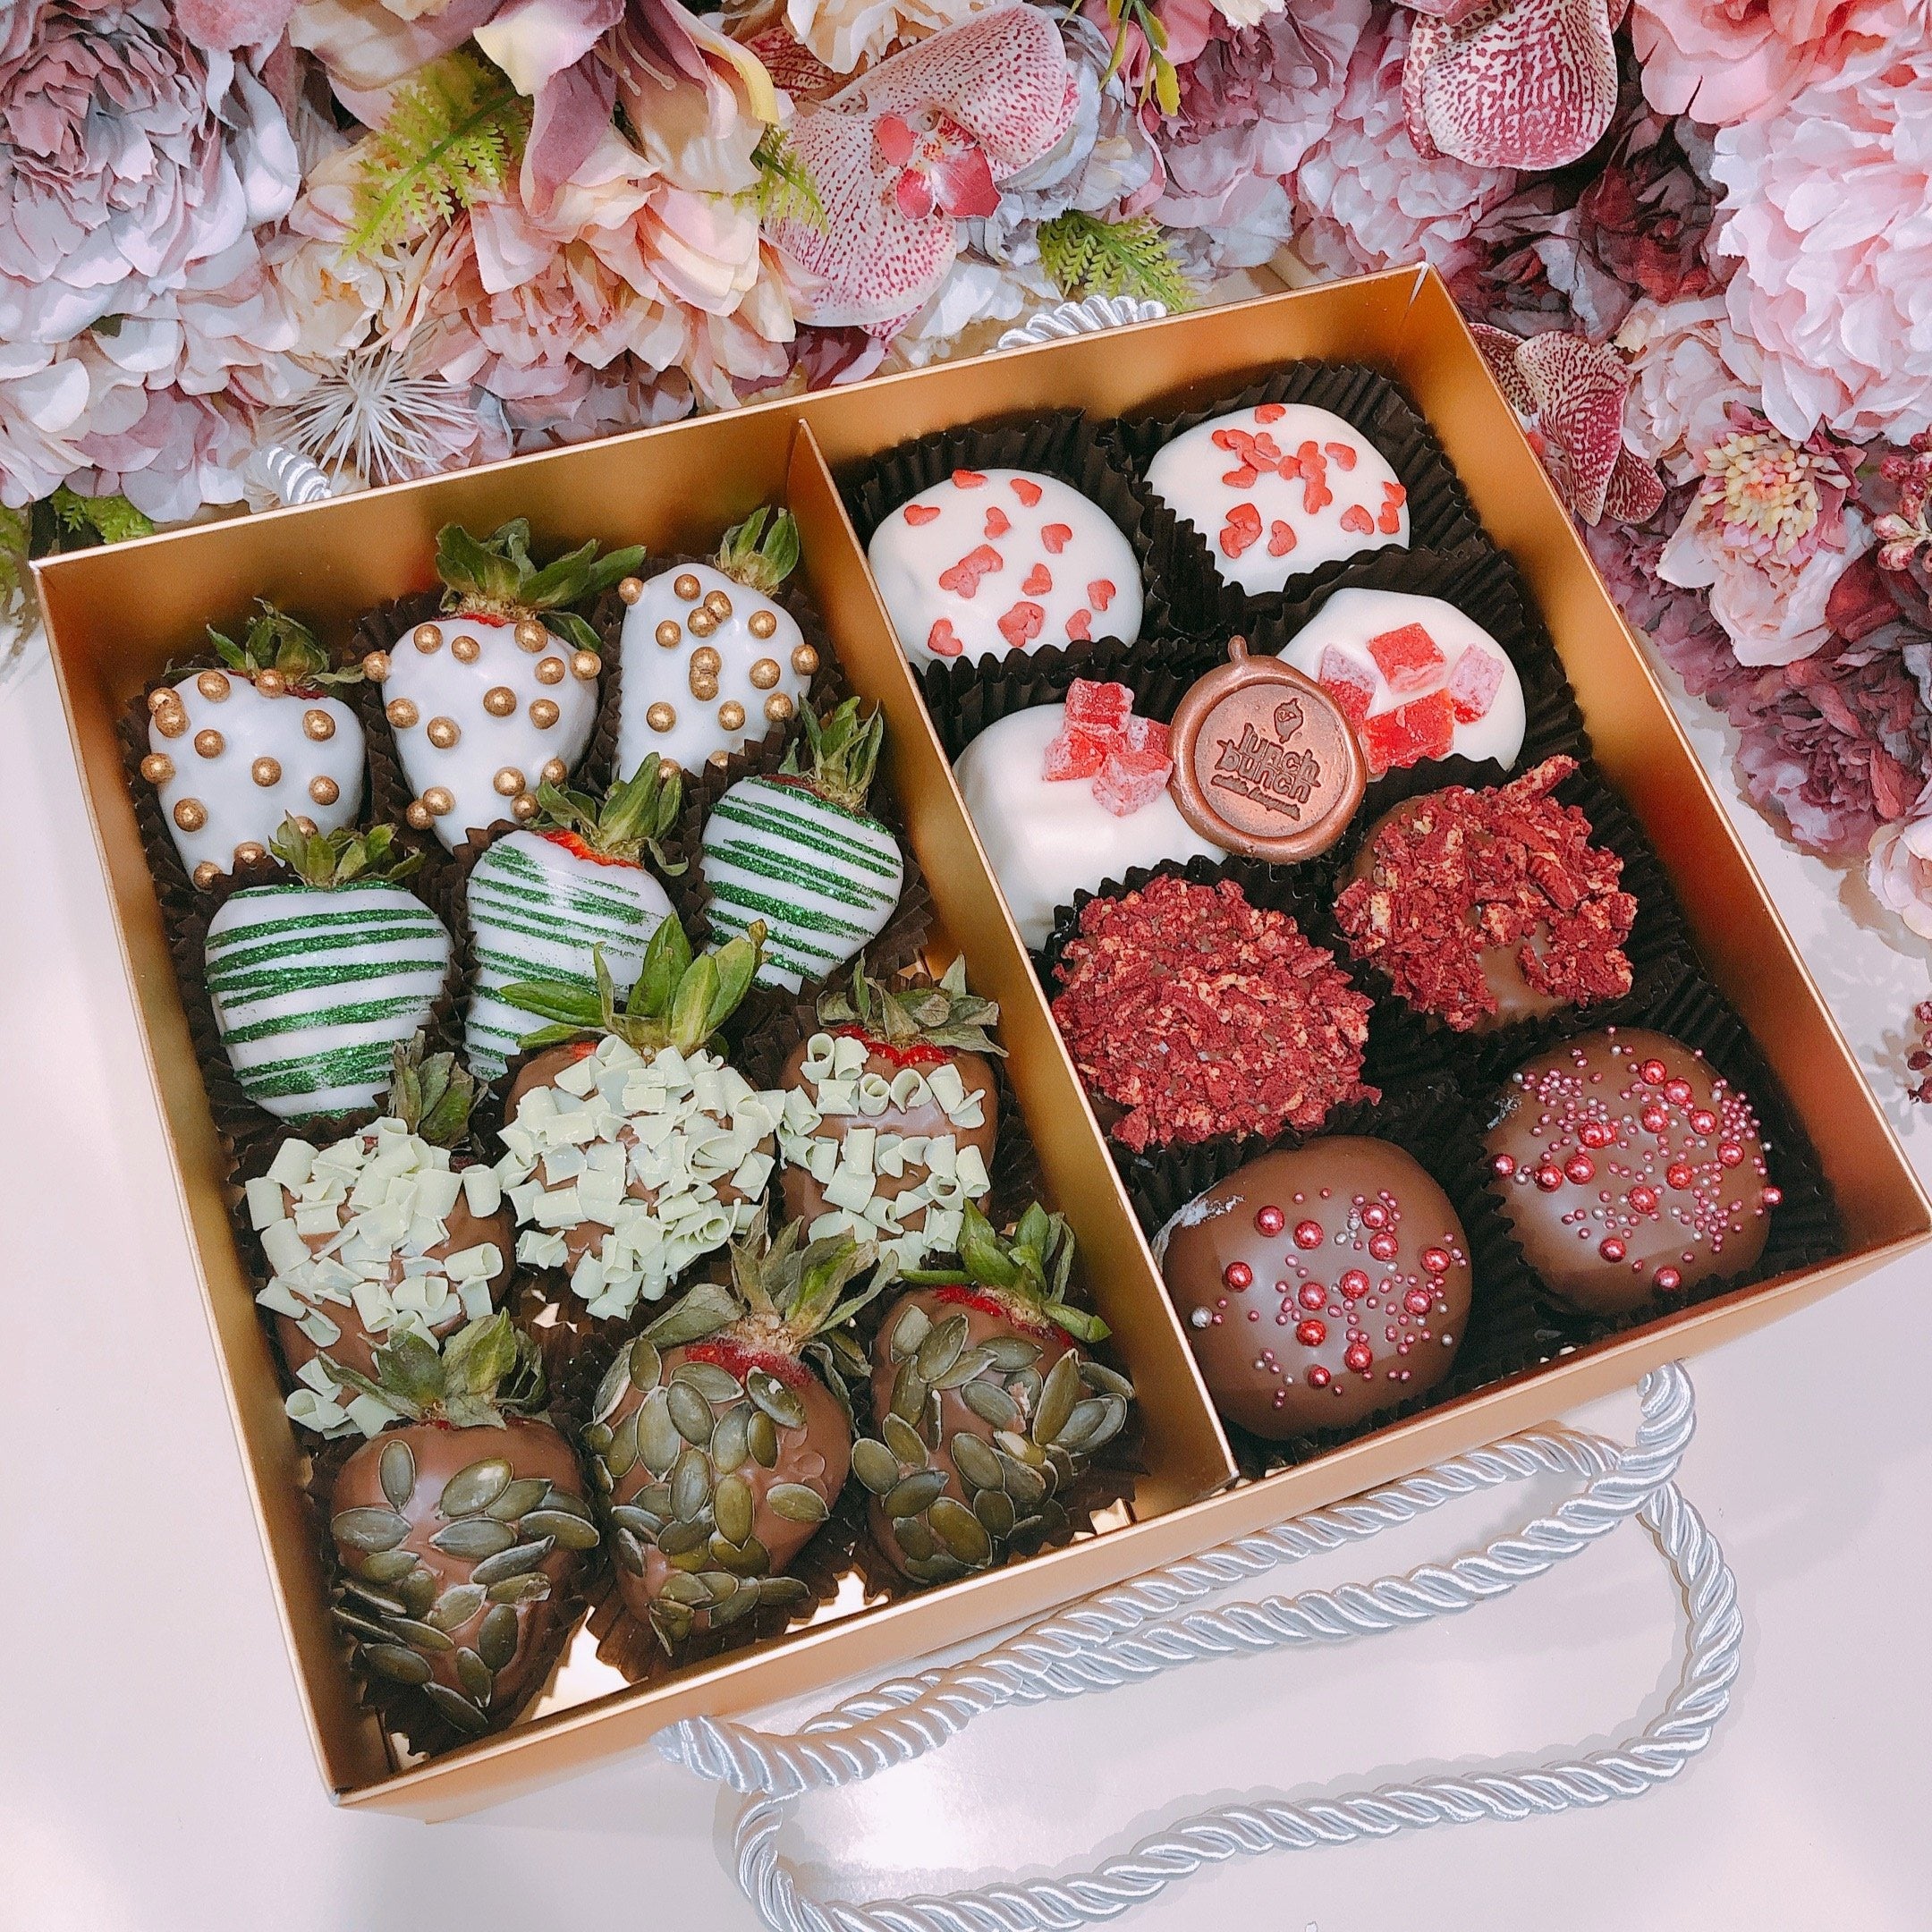 Chocolate strawberries and doughnuts hamper, mini donuts and chocolate covered strawberries in a gift box